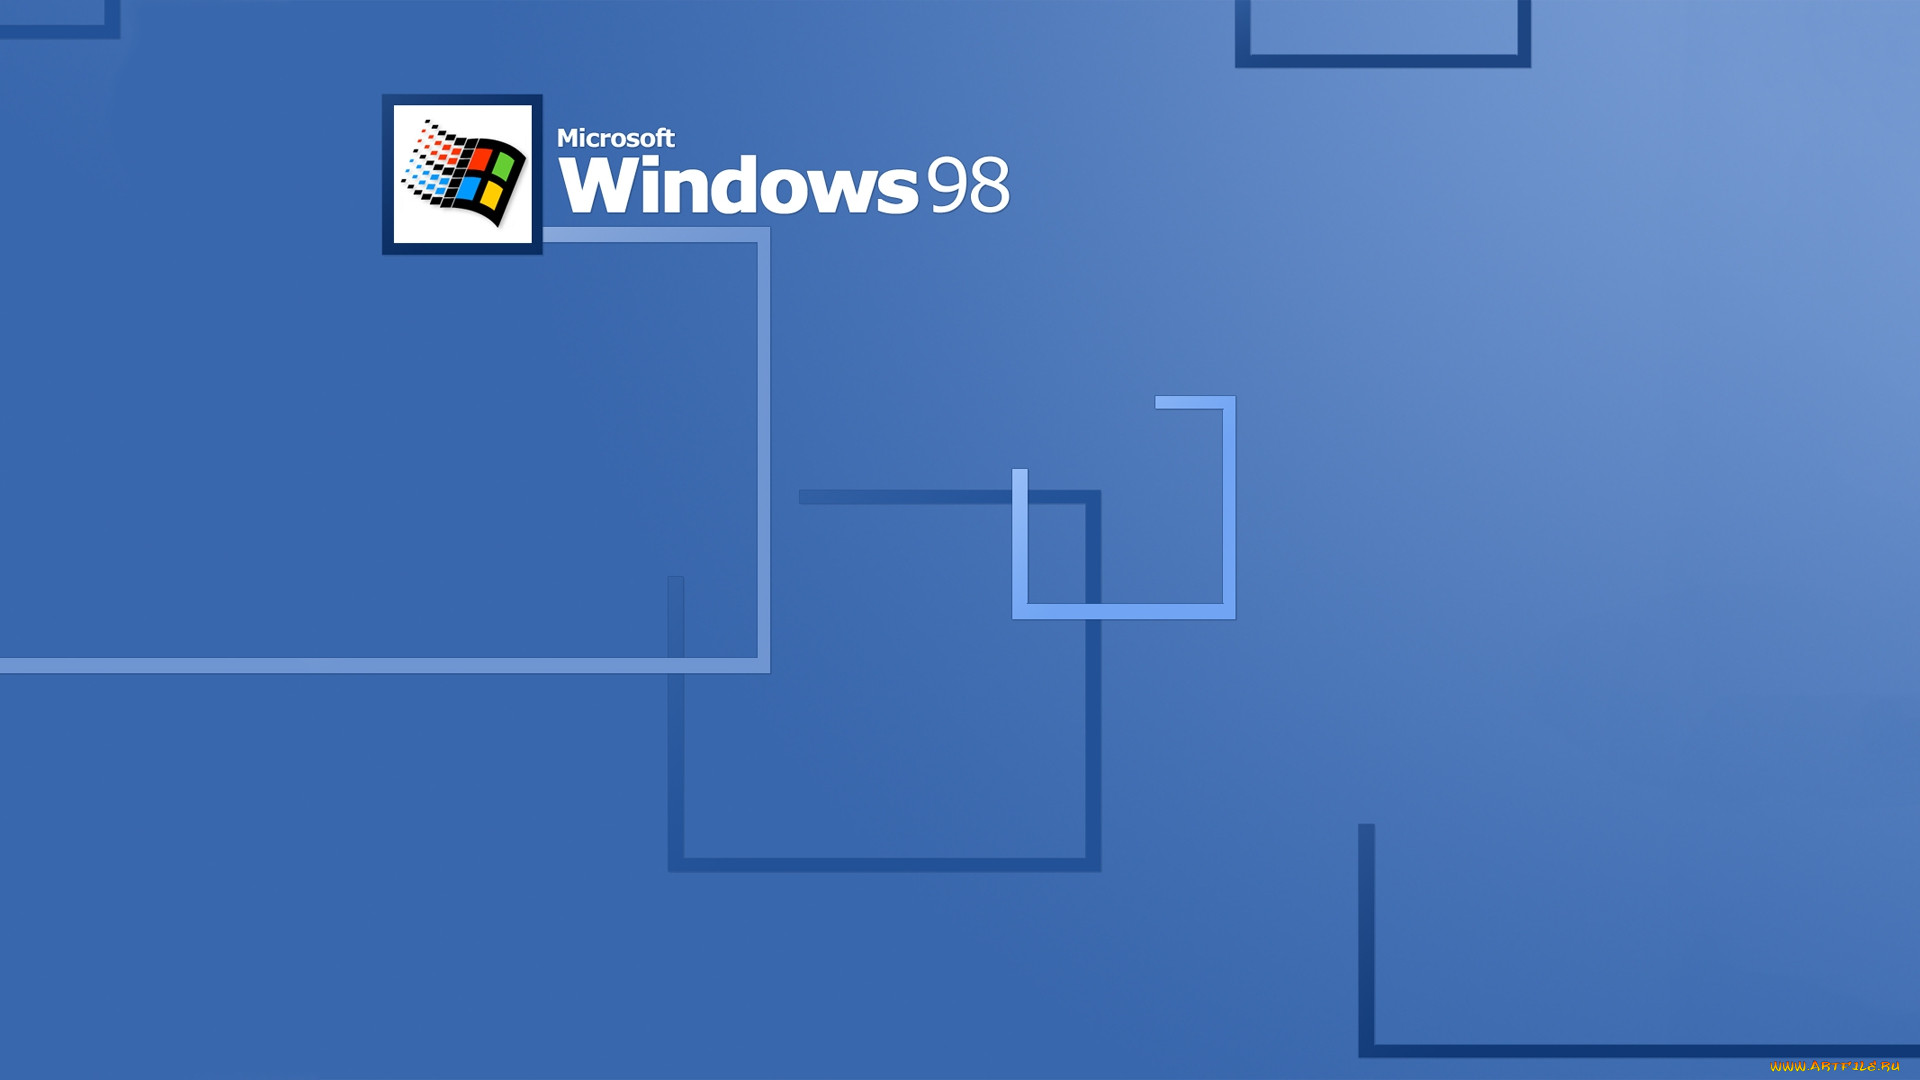 Windows 95 рабочий стол